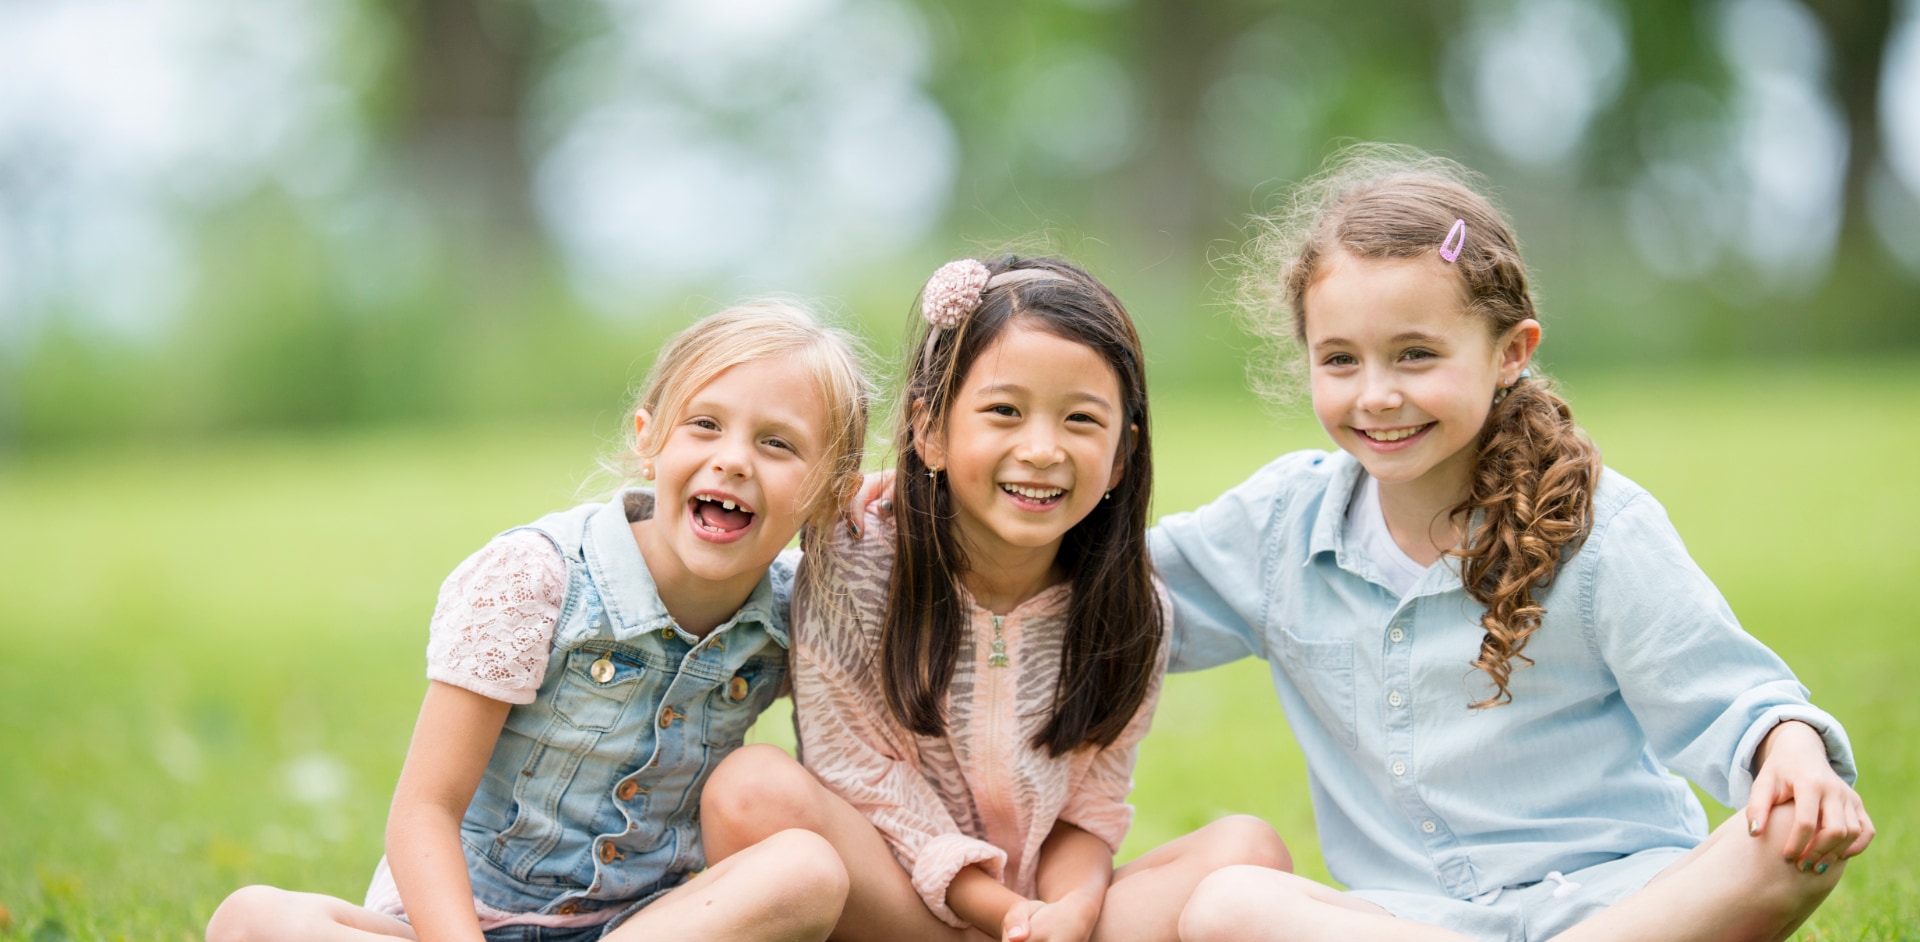 Three children smiling in a field